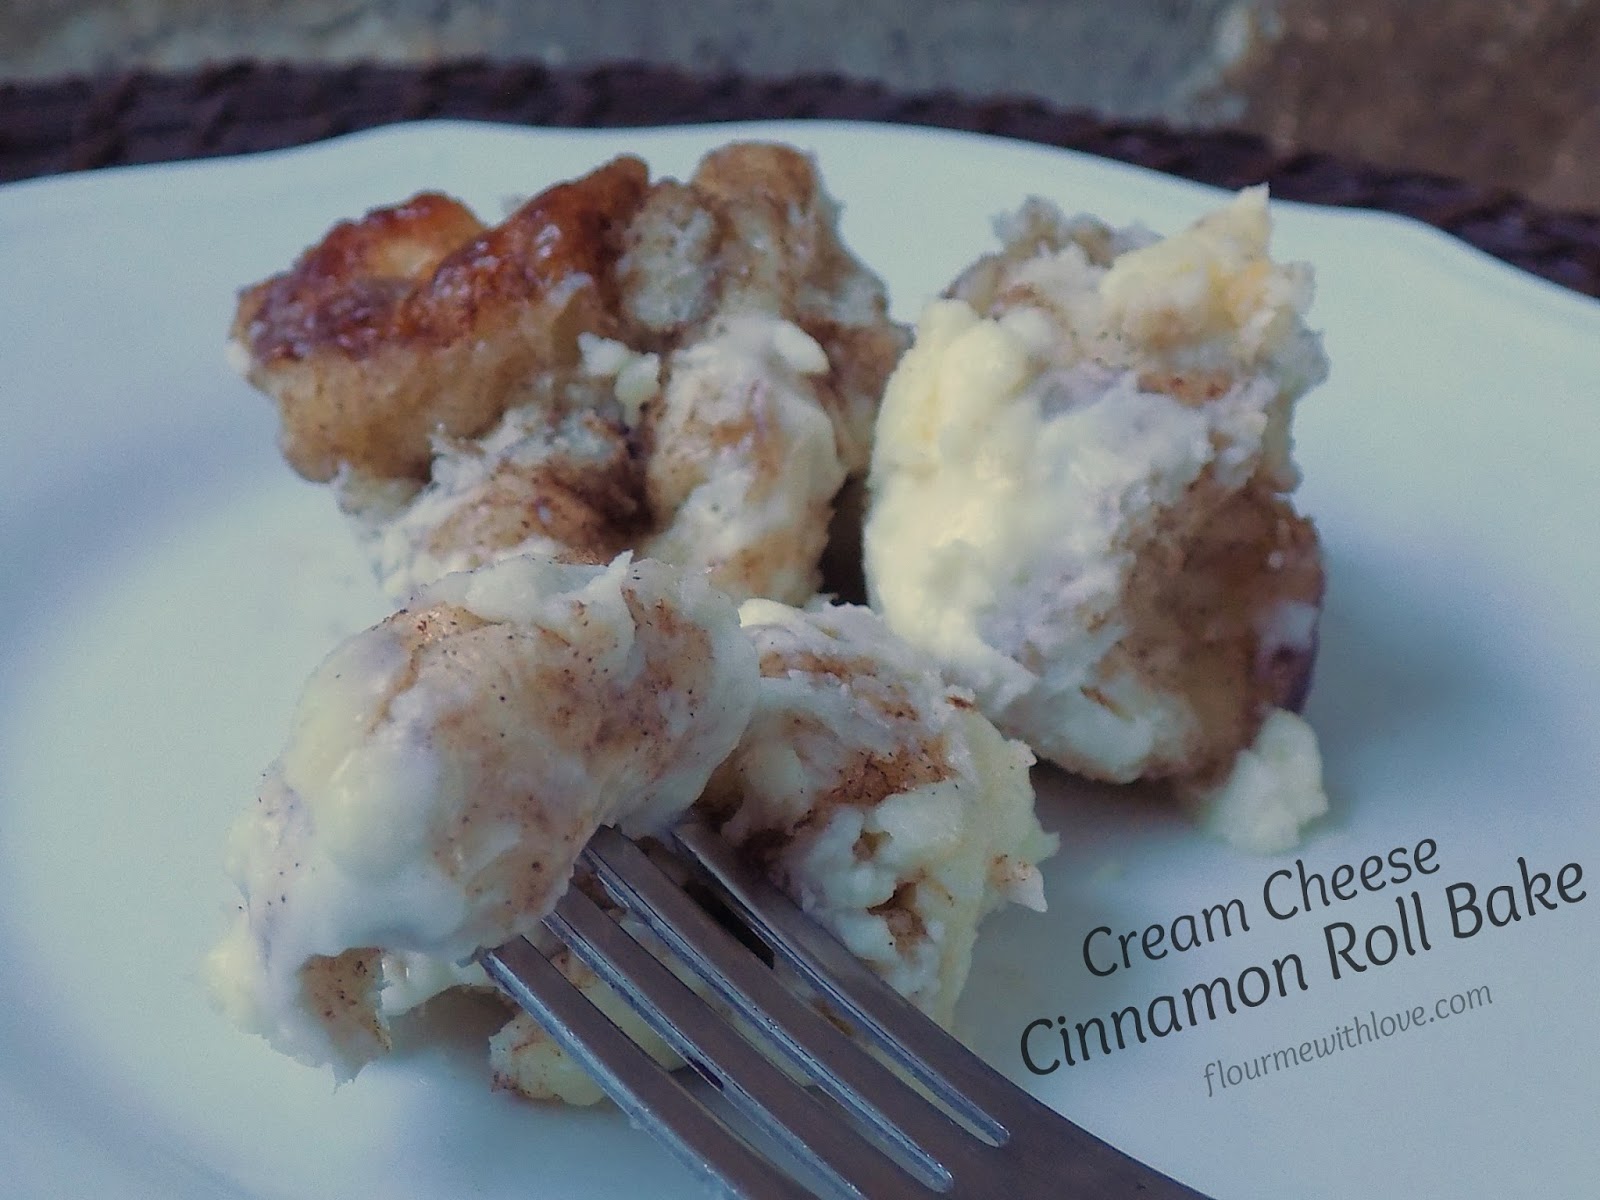 Cream Cheese Cinnamon Roll Bake | Flour Me With Love